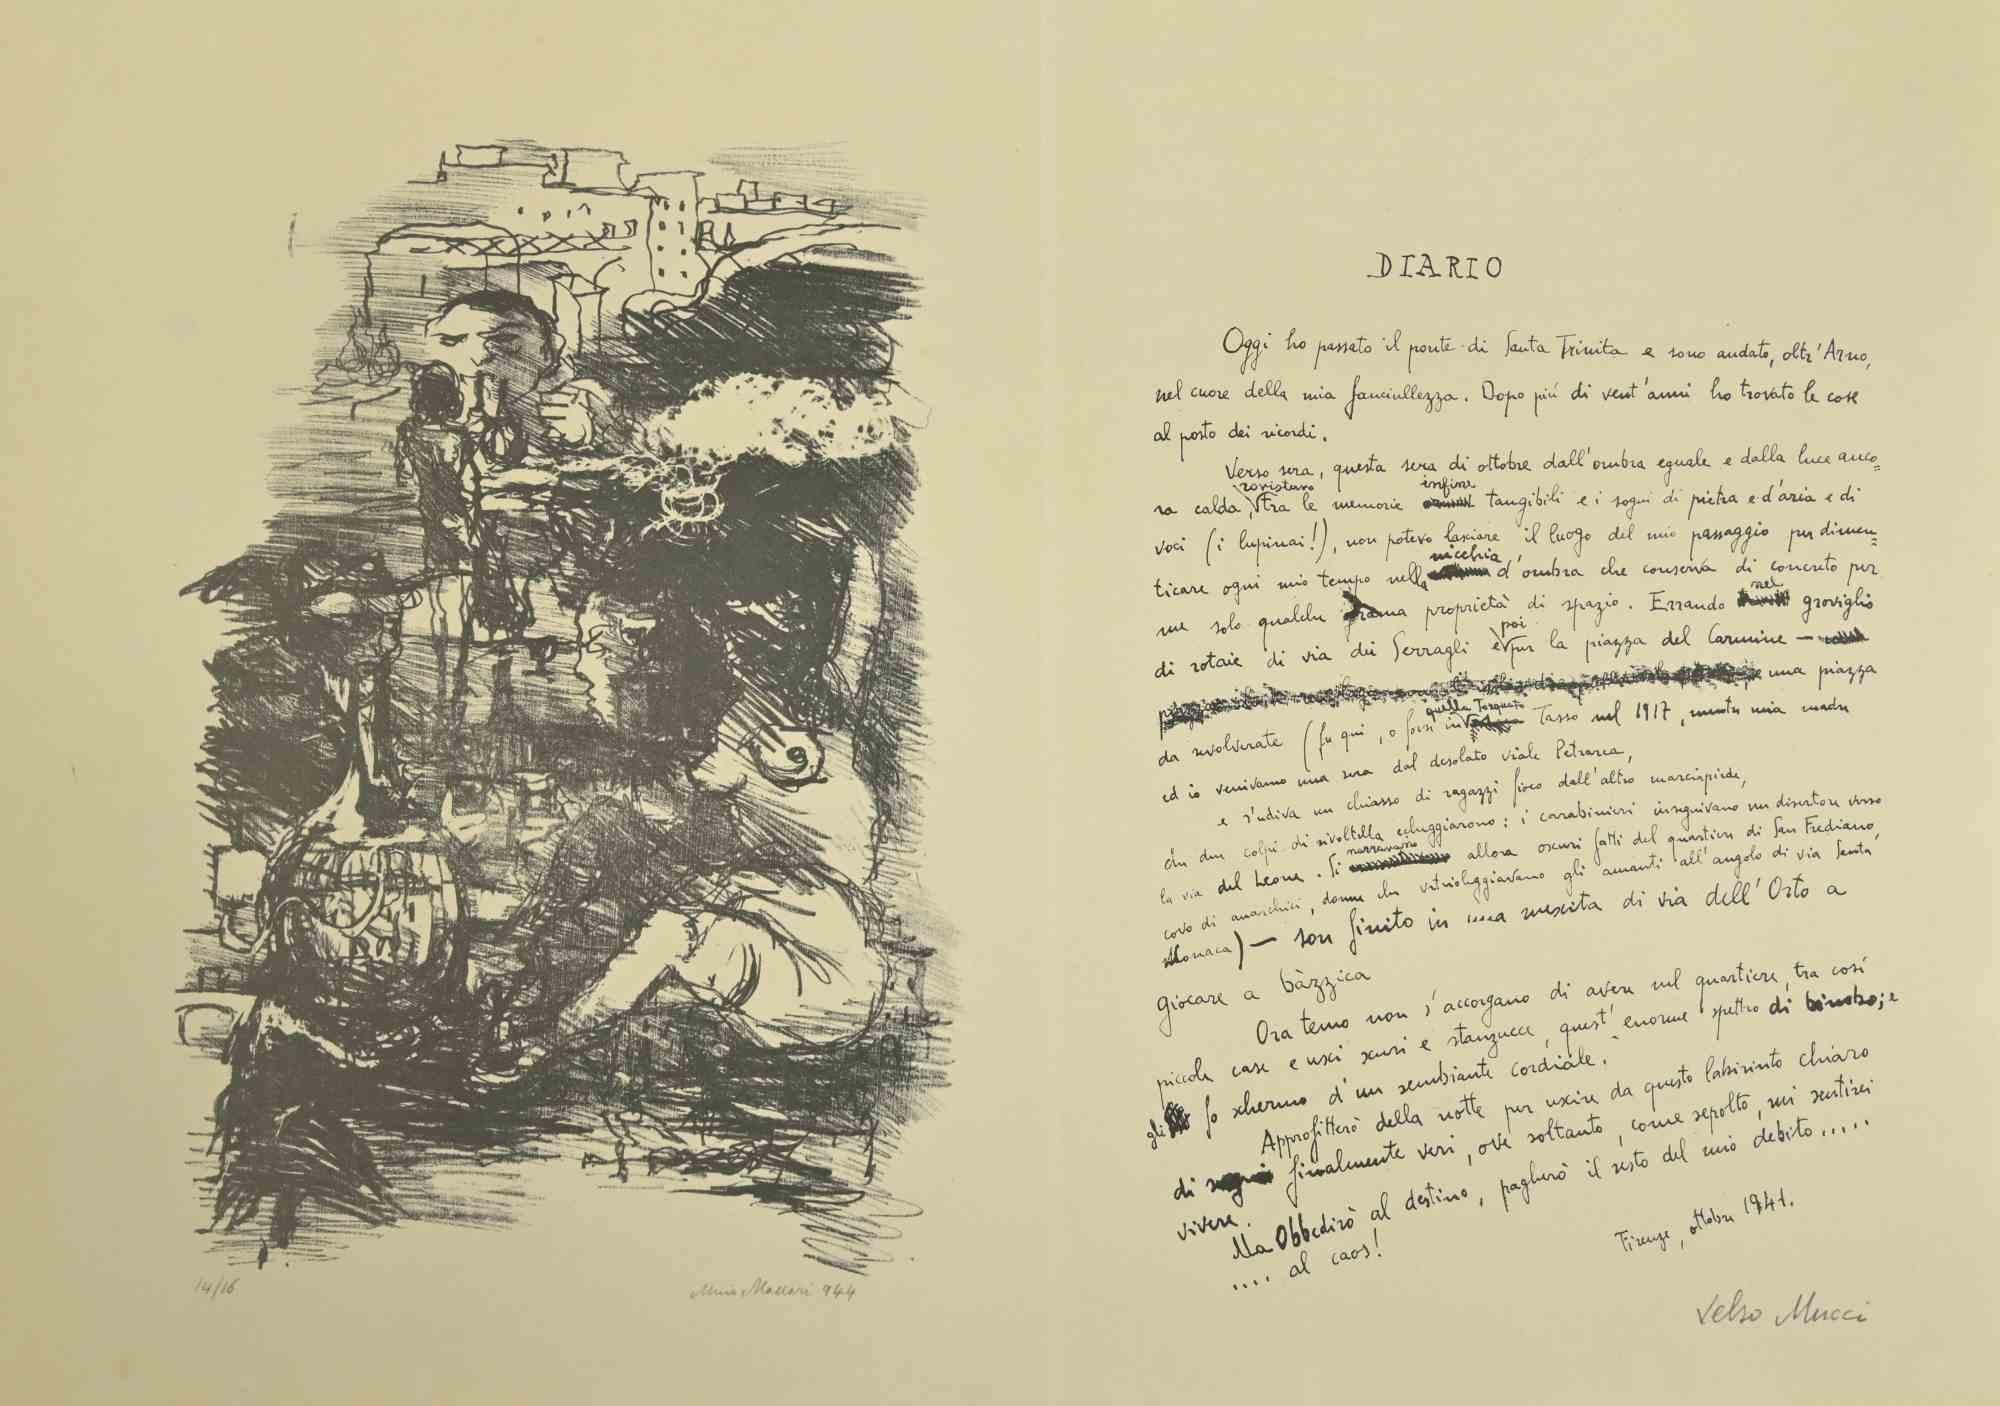 The Diary - Lithograph Print by Mino Maccari - 1944